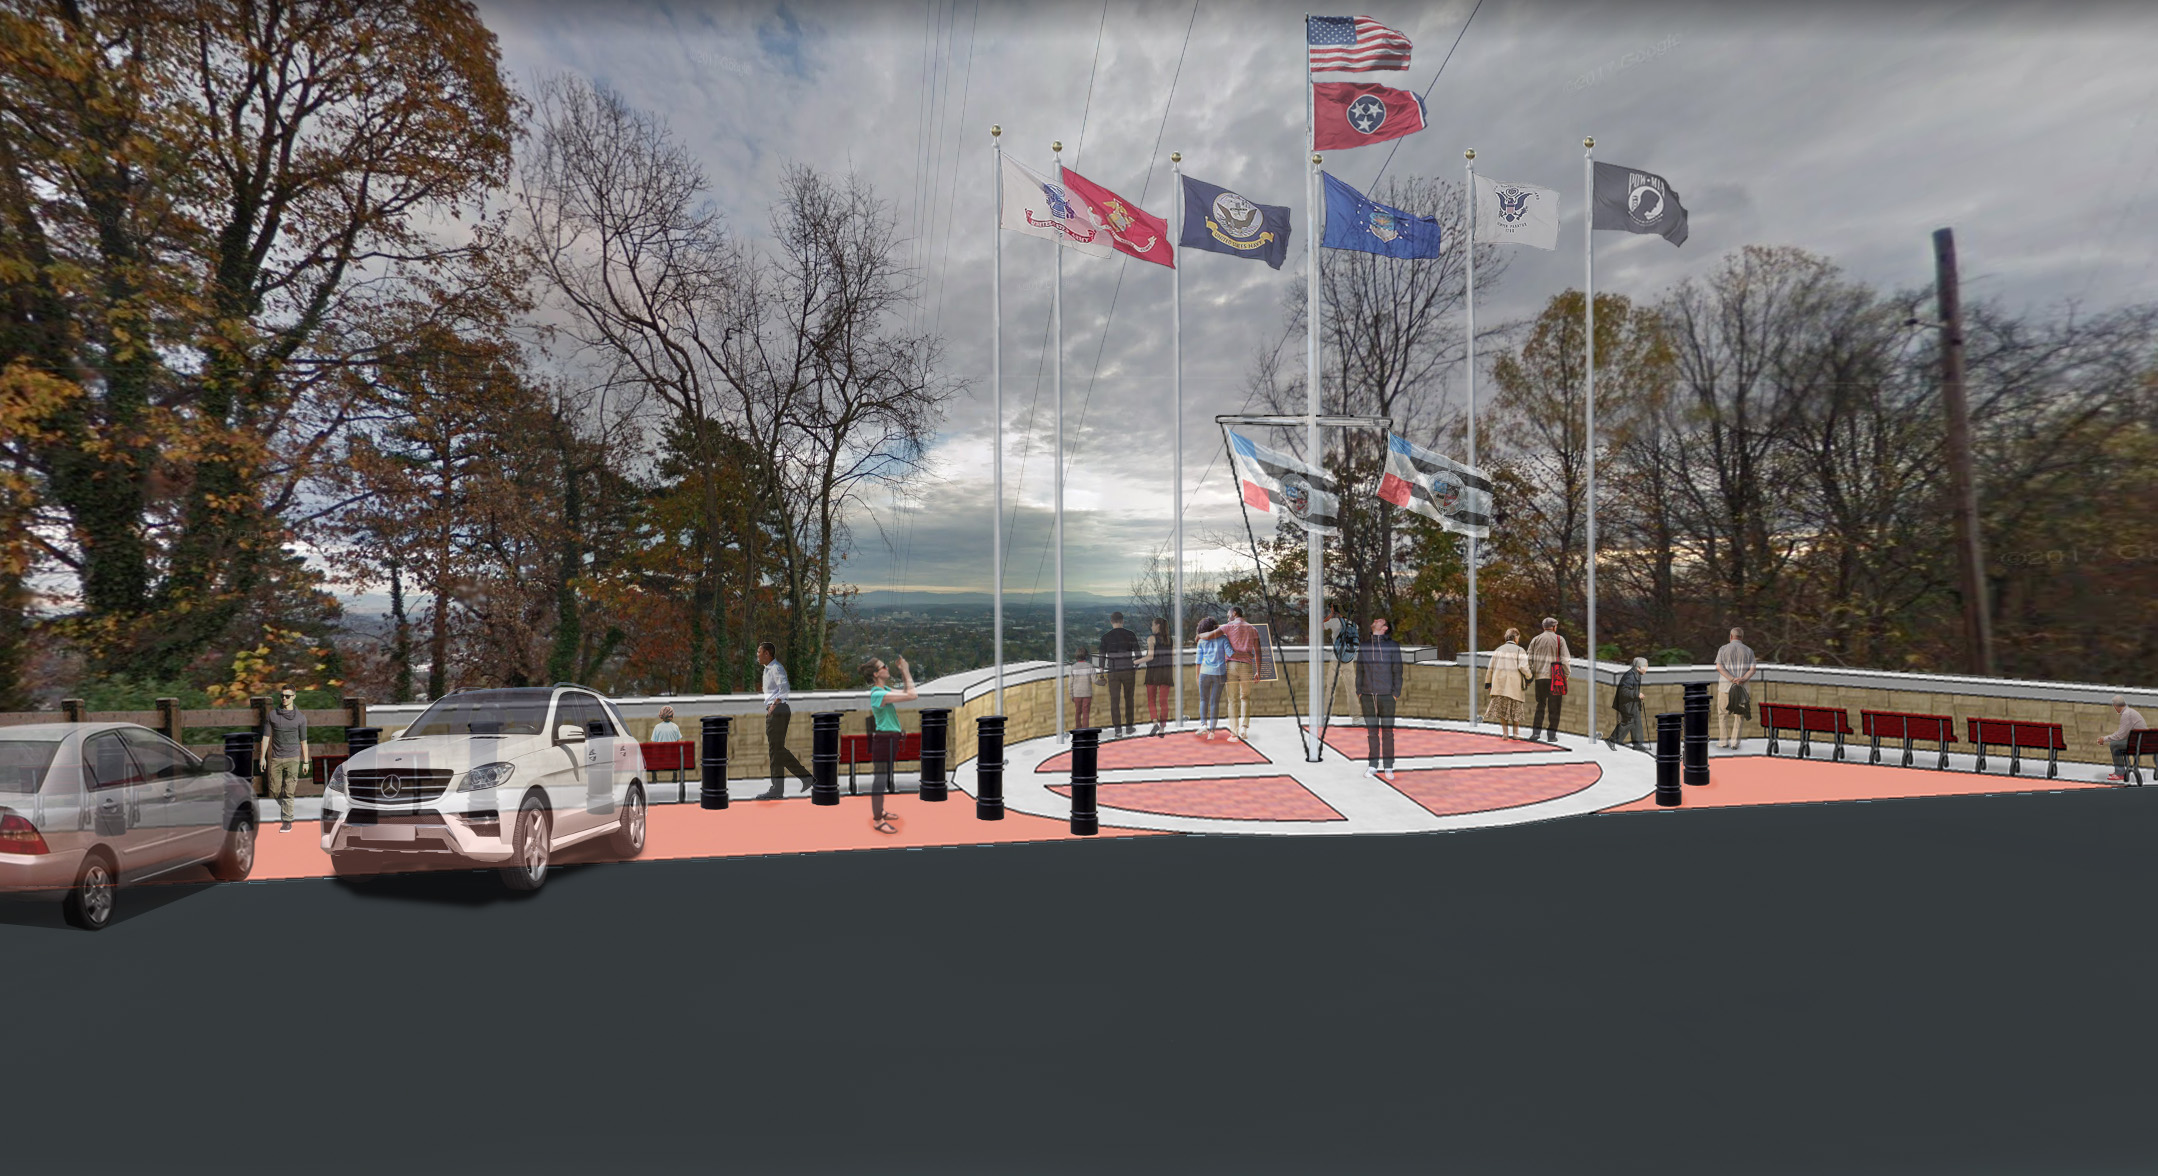 Featured image for “Sharps Ridge Veterans Memorial Park”